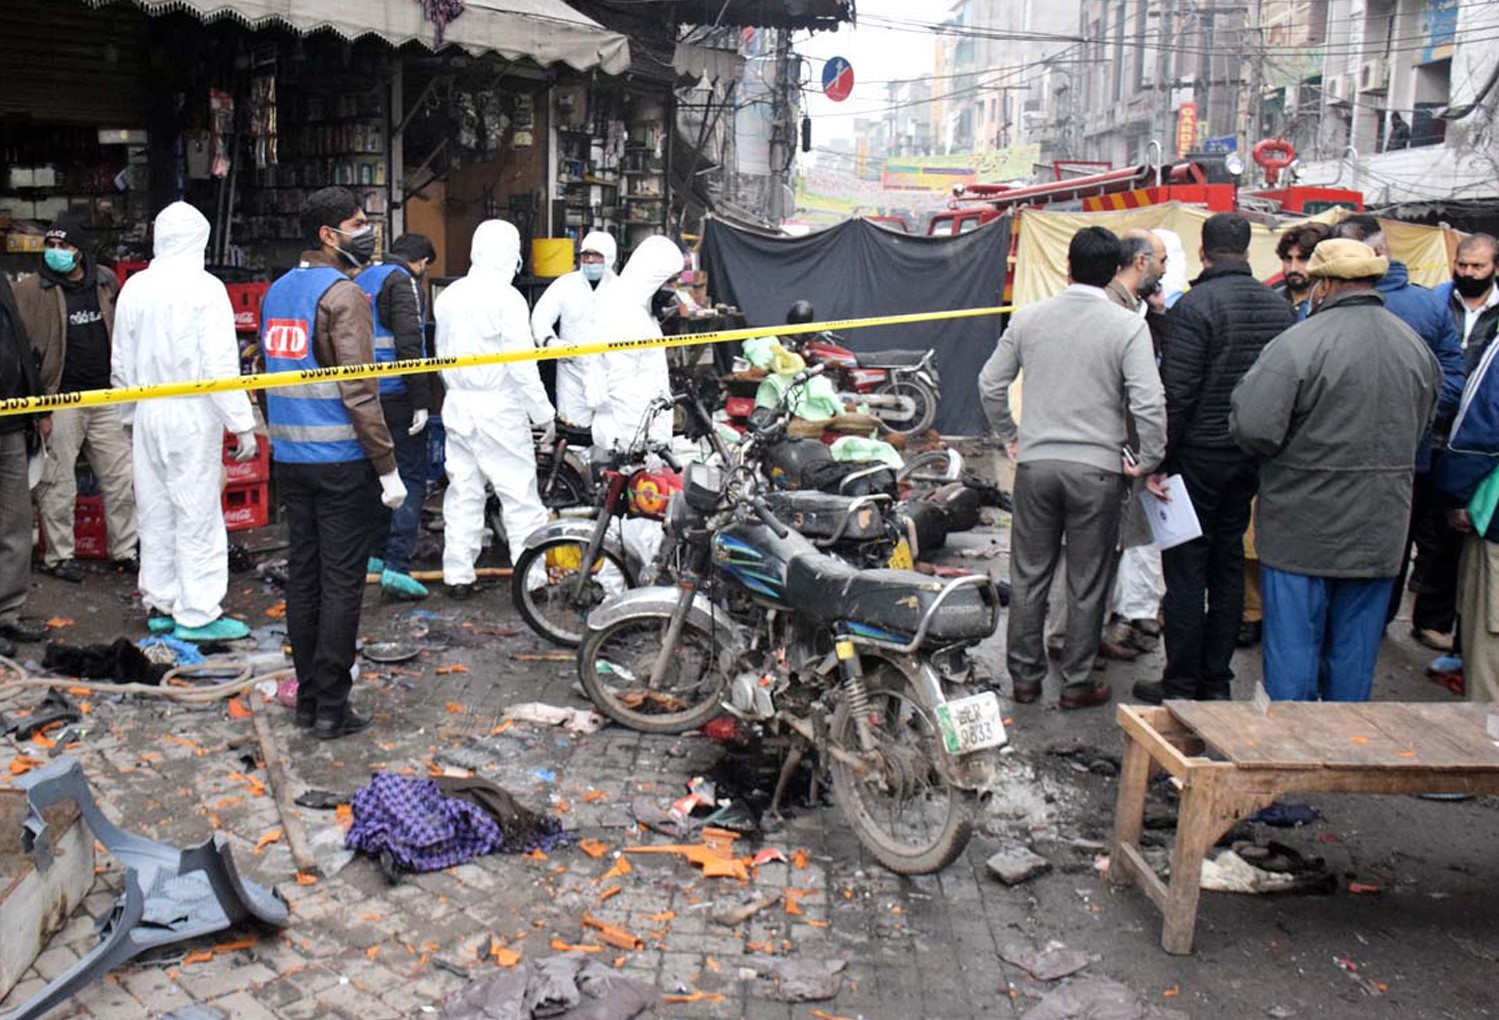 لاہور دھماکا: نئی تنظیم نے ذمہ داری قبول کر لی